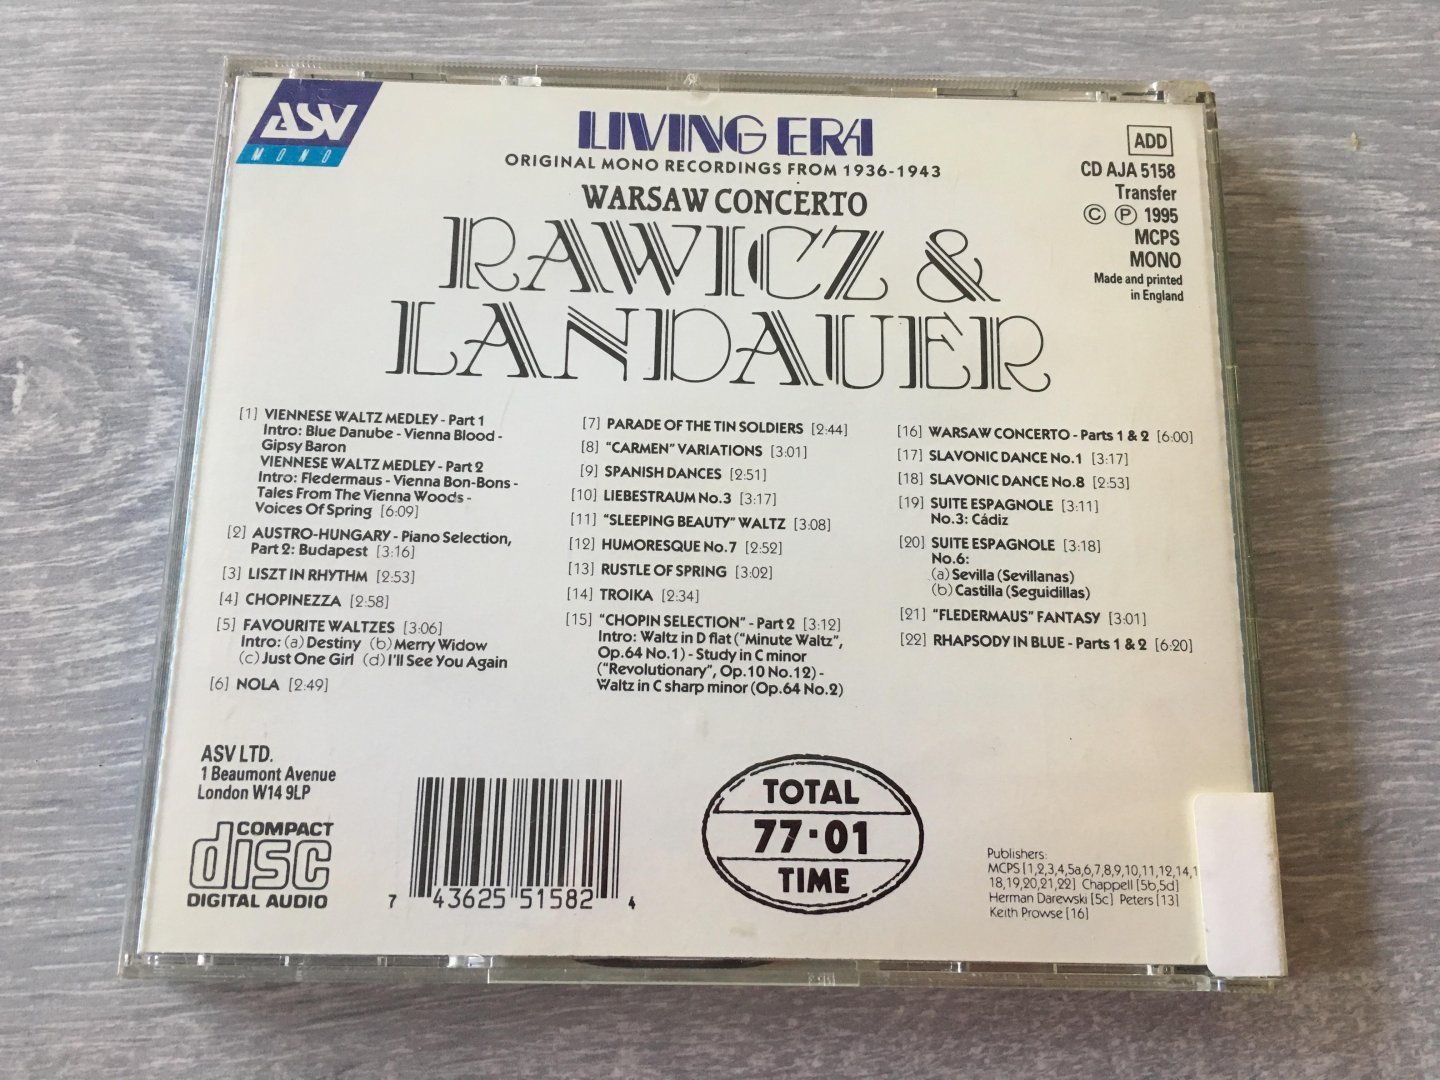 Wawicz & Landauer - CD; Wawicz & Landauer; Warsaw concerto